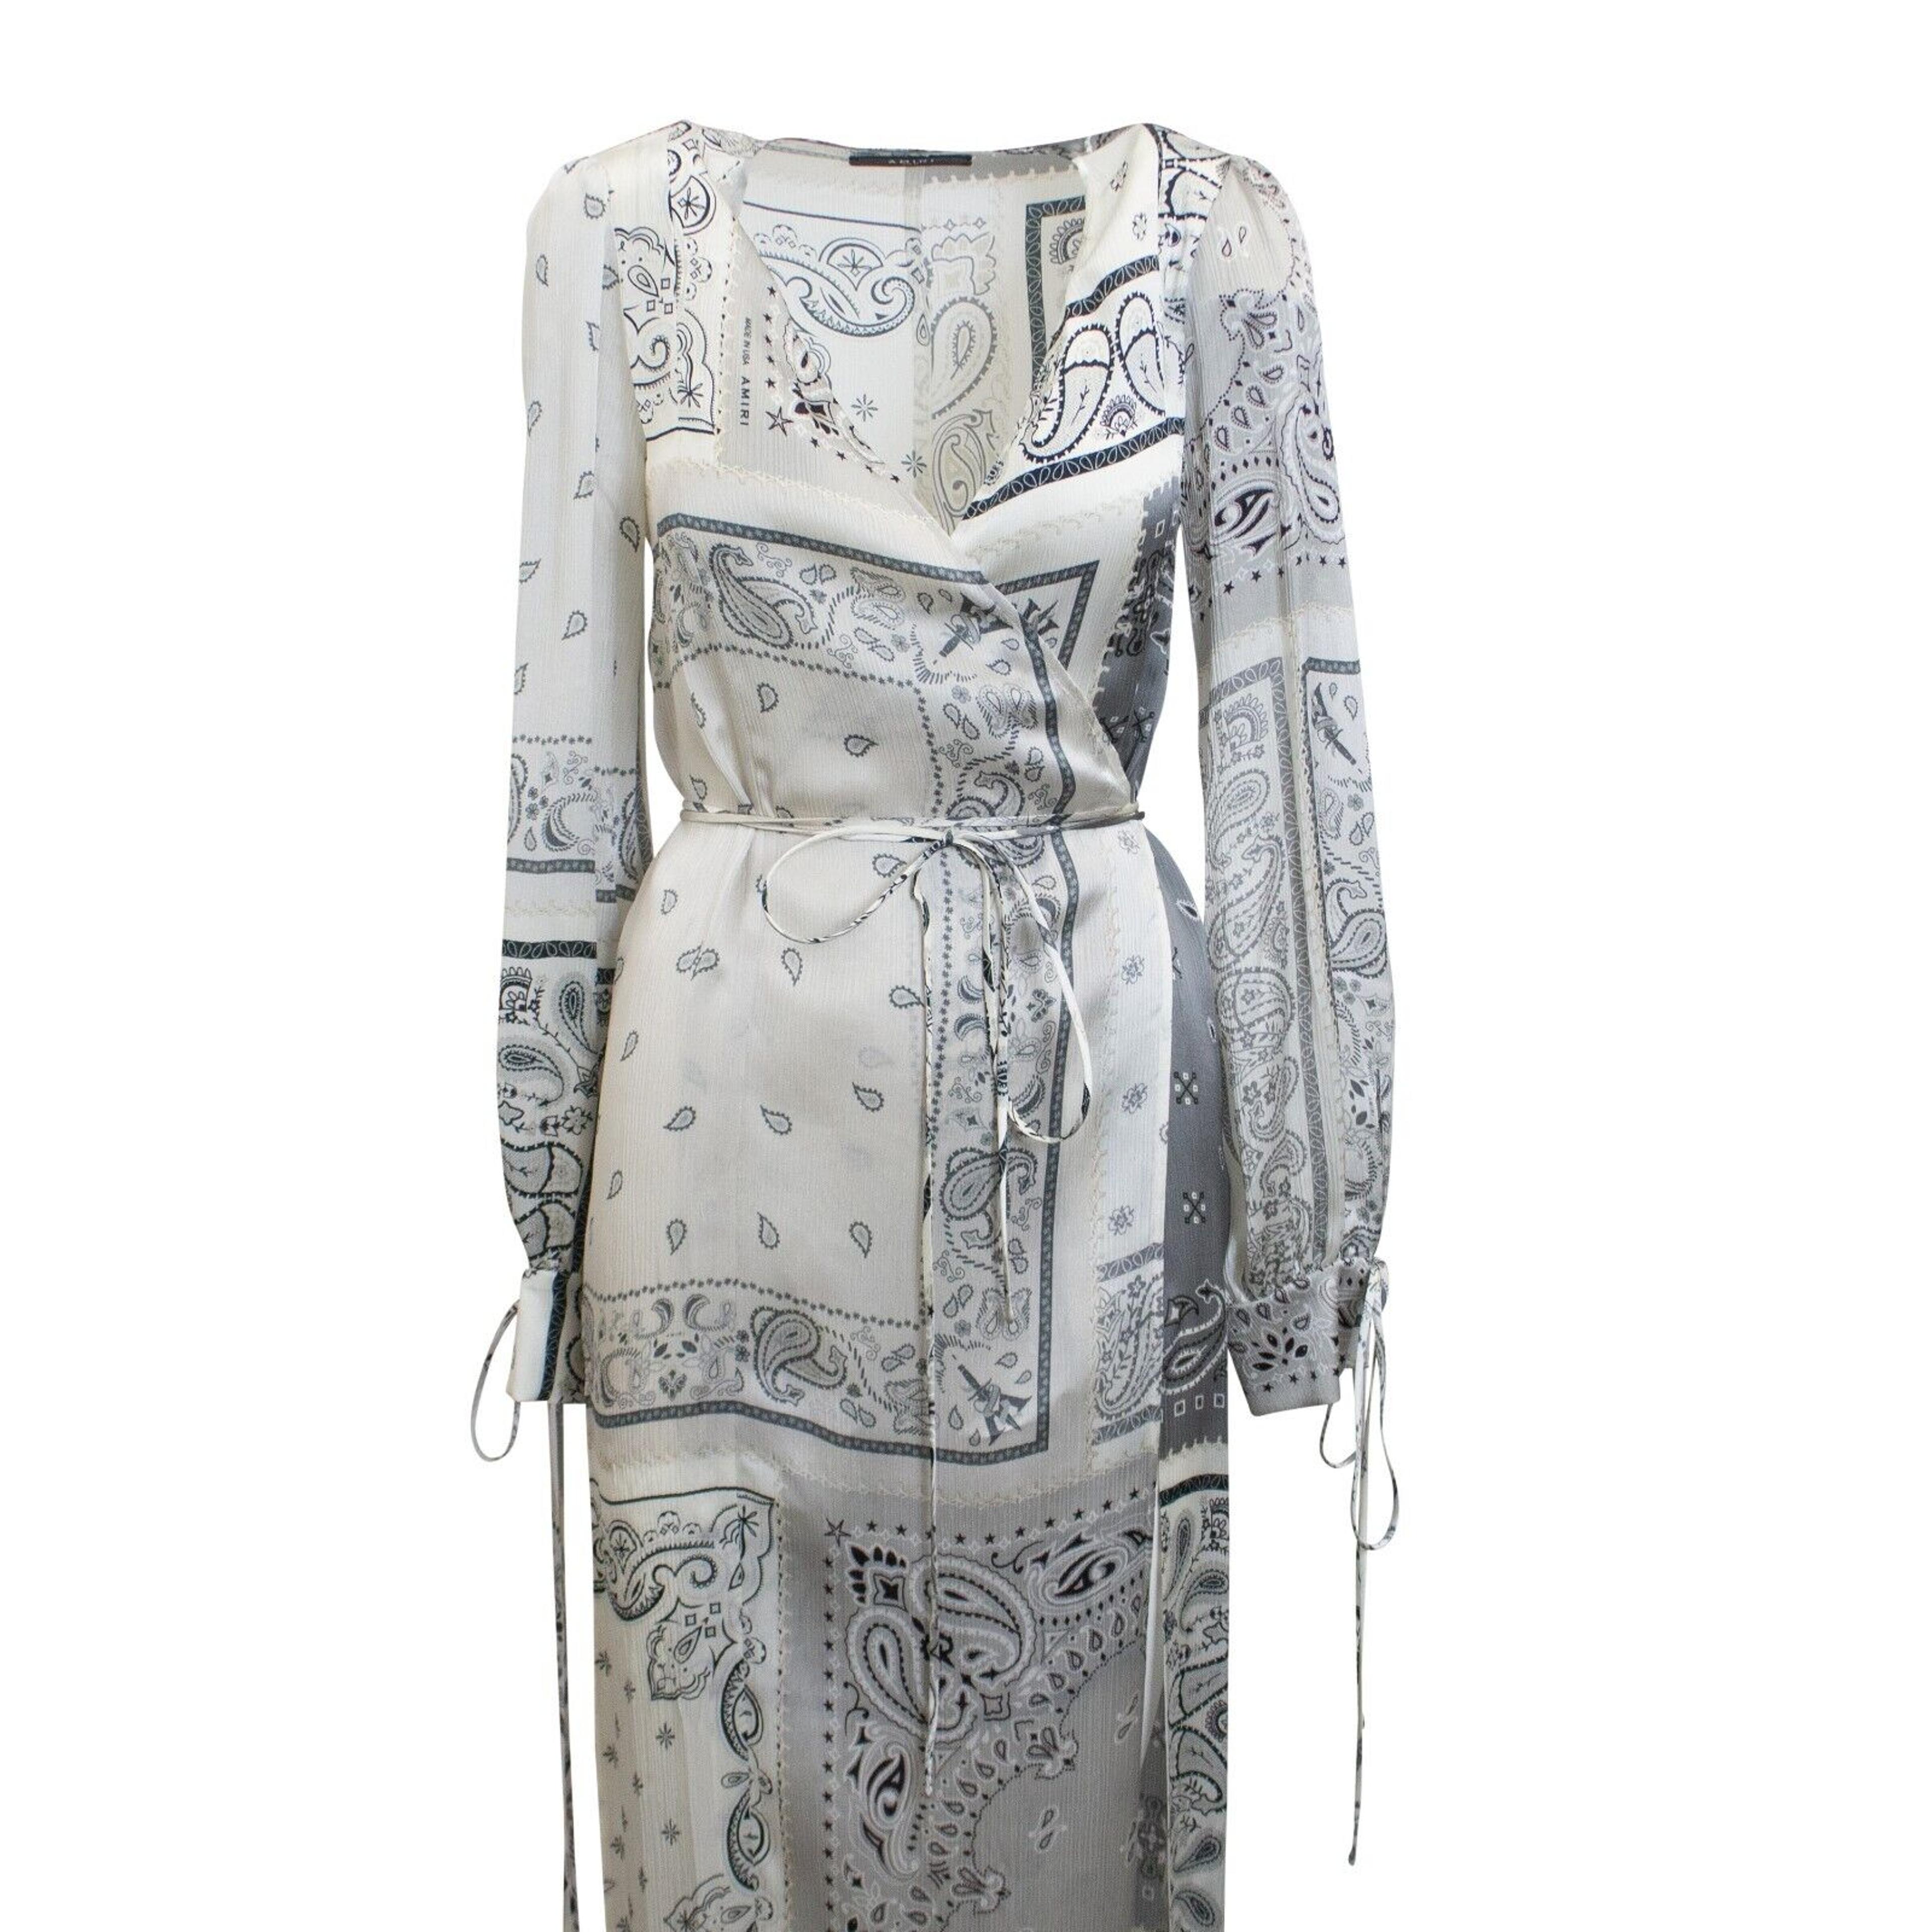 Alternate View 2 of Grey Bandana Recon Kimono Dress